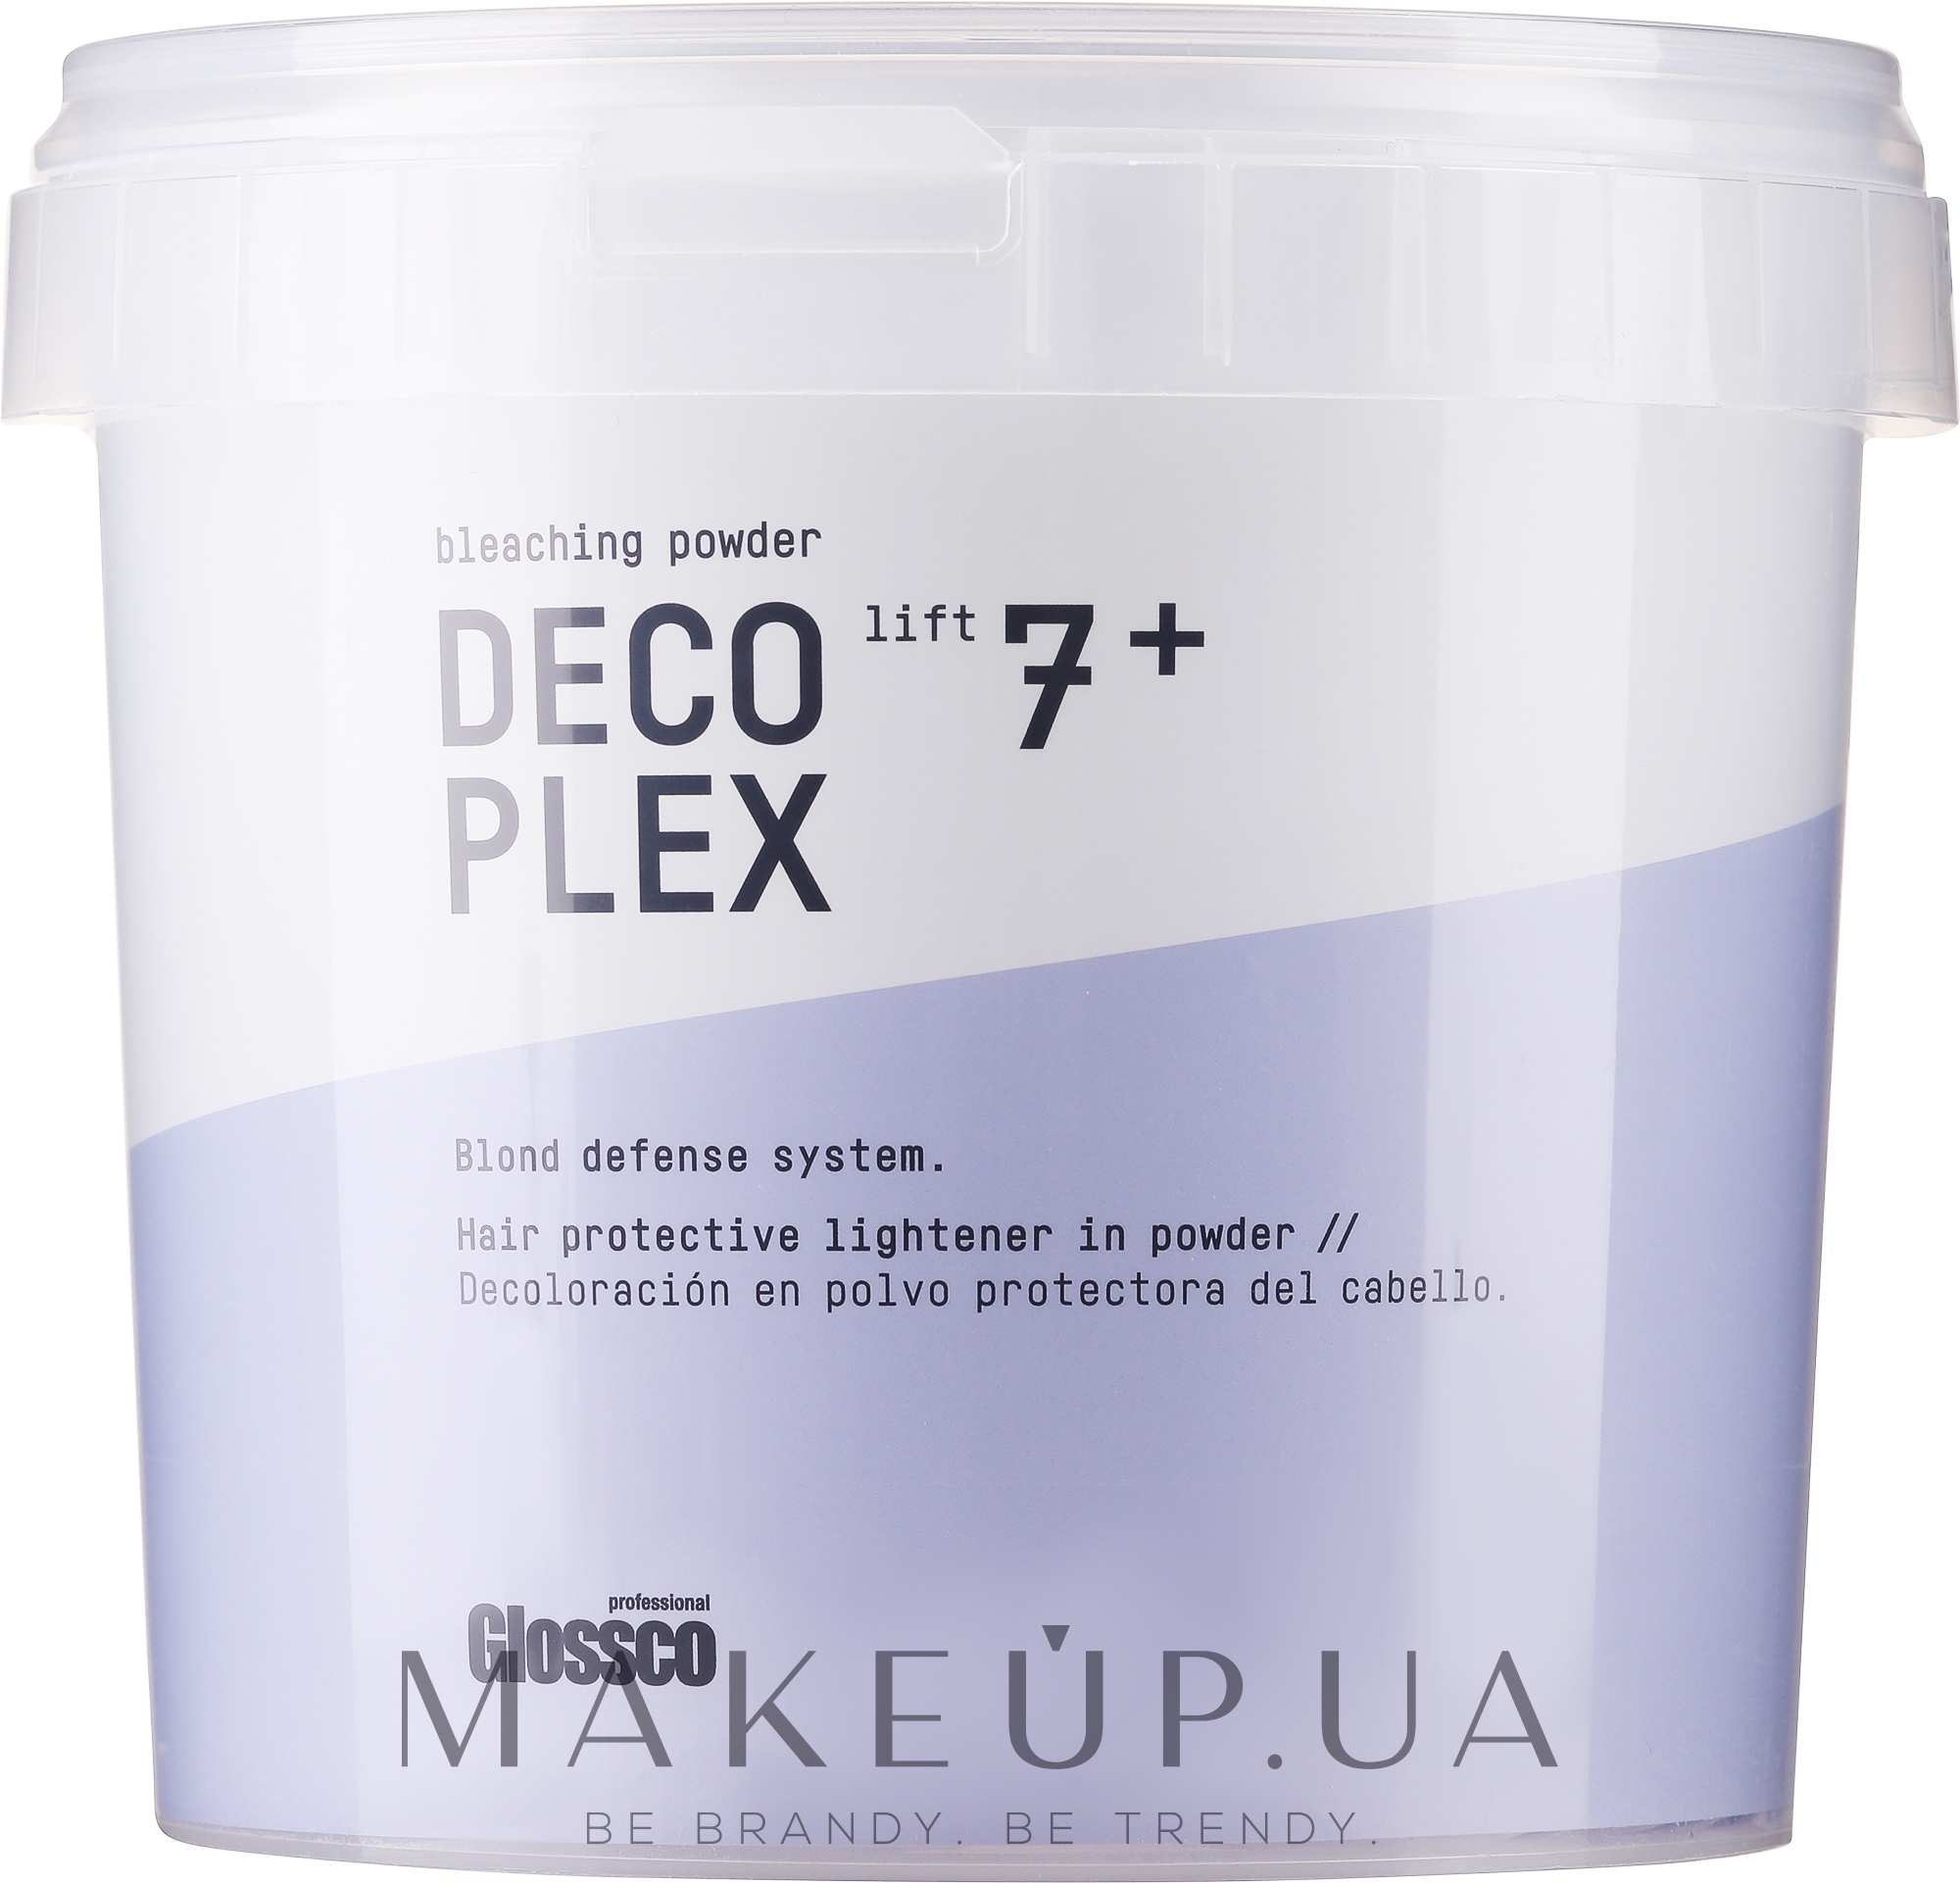 Осветляющая пудра для волос - Glossco Color DecoPlex Light 7+ Blond Defense System — фото 1000g